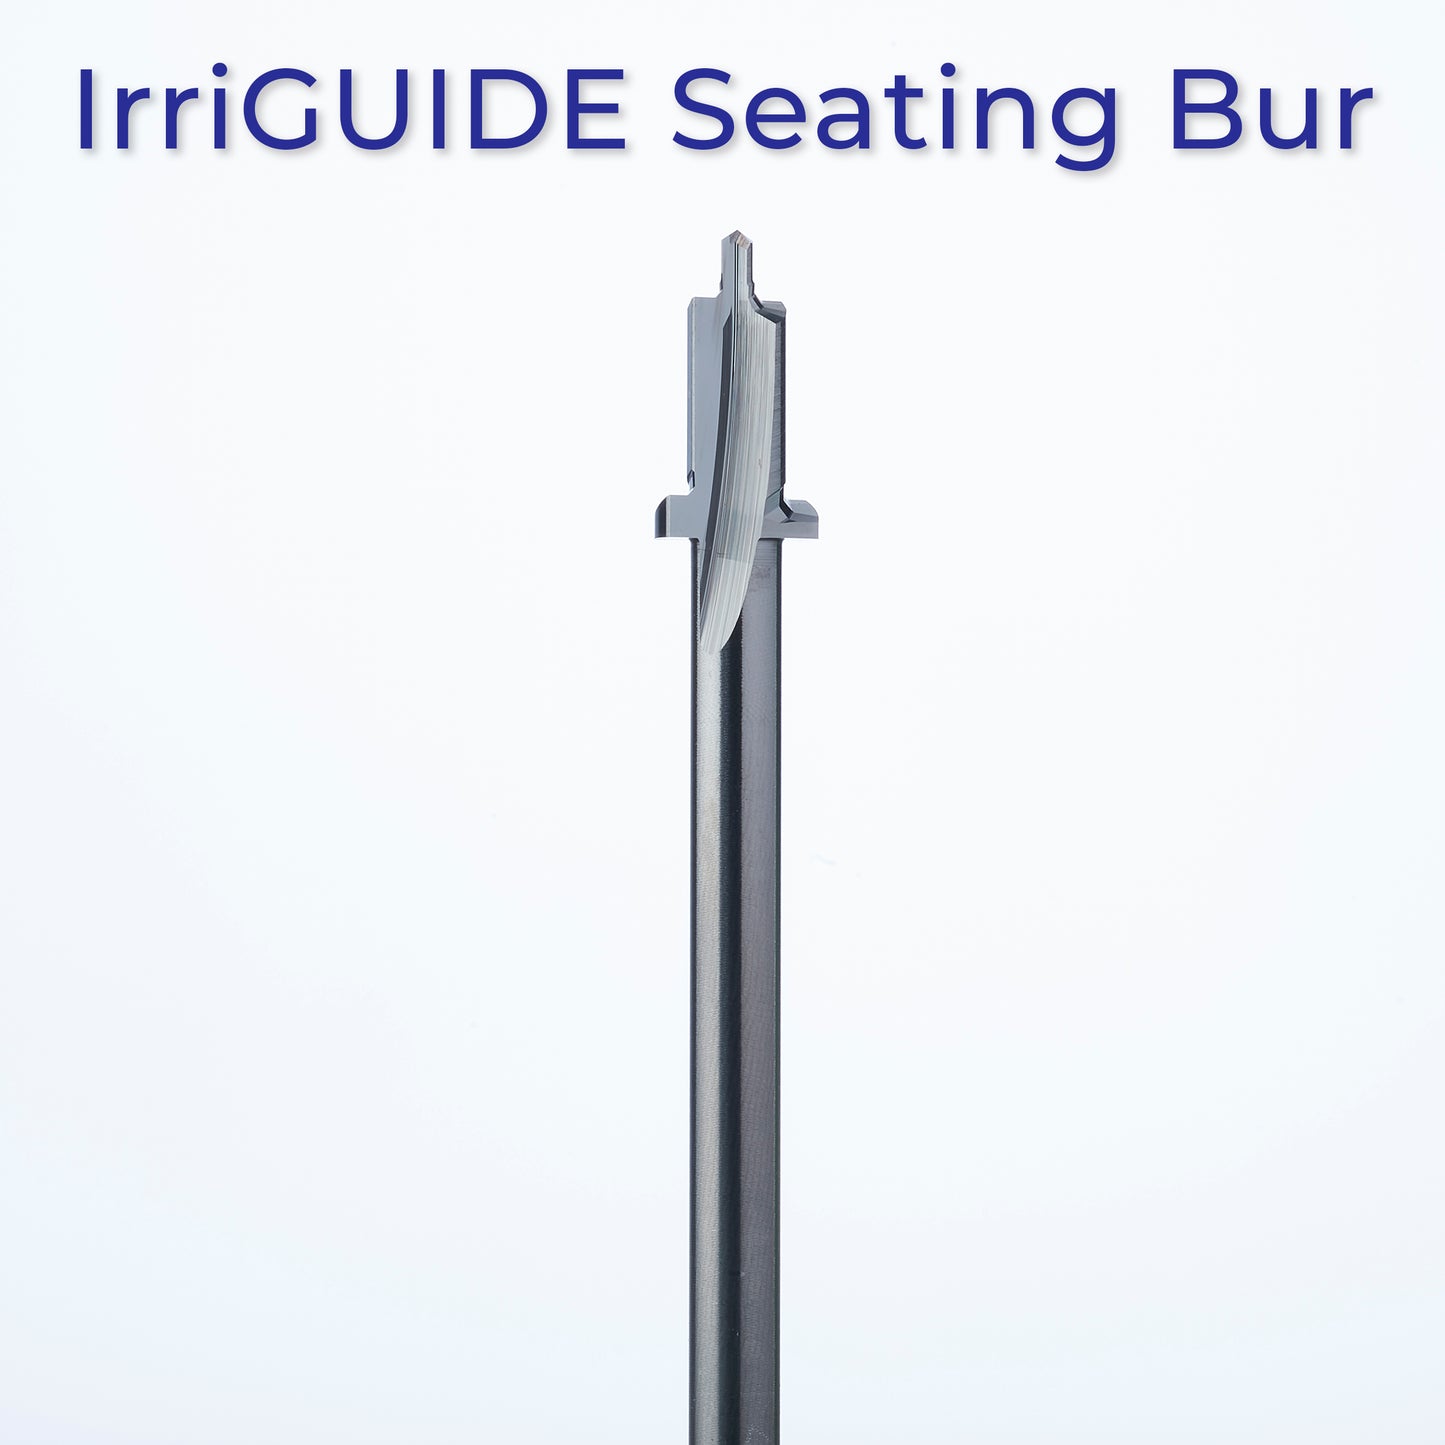 IrriGUIDE Bur Kit